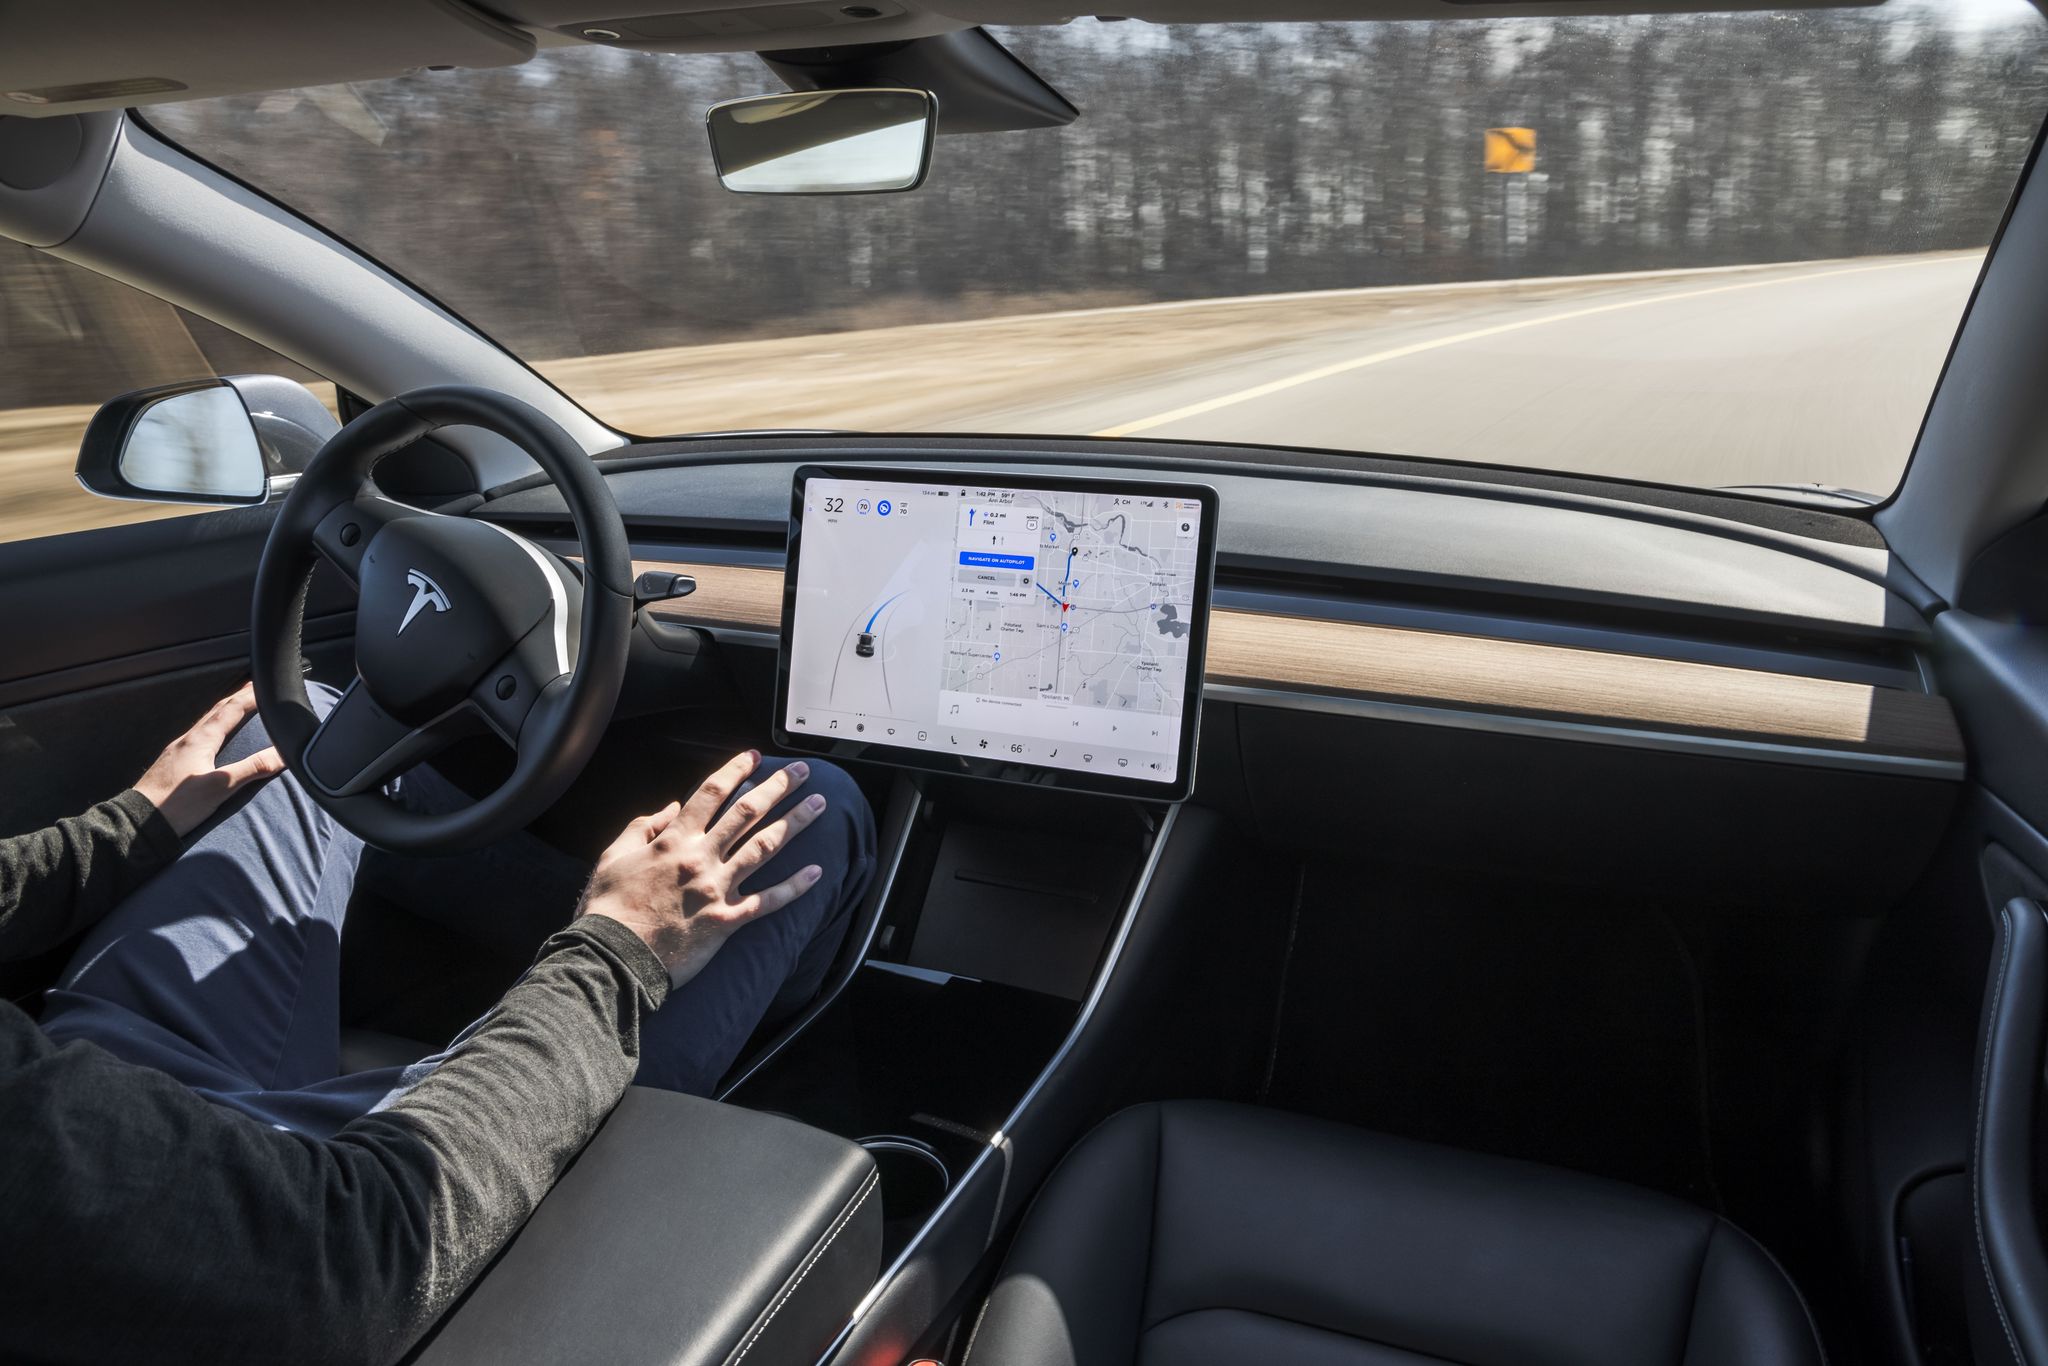 Back to the Basics: Tesla Navigation 